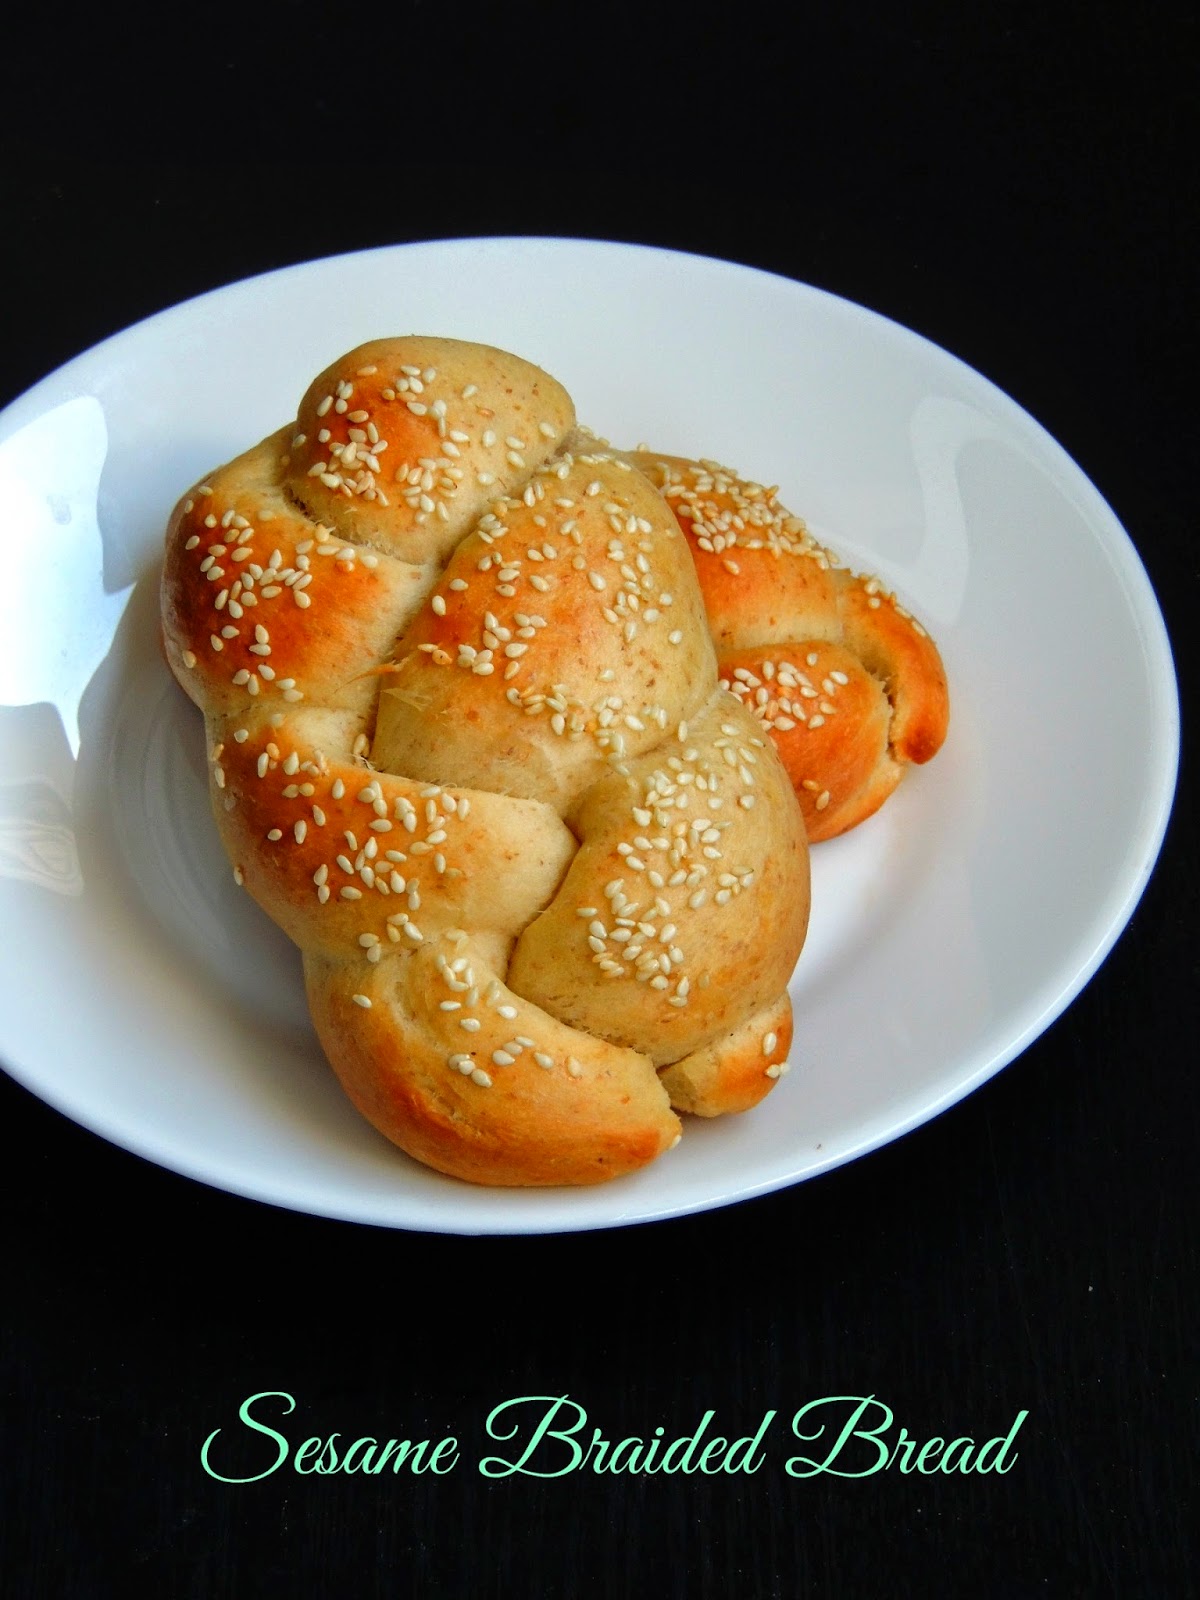 Sesame braided bread